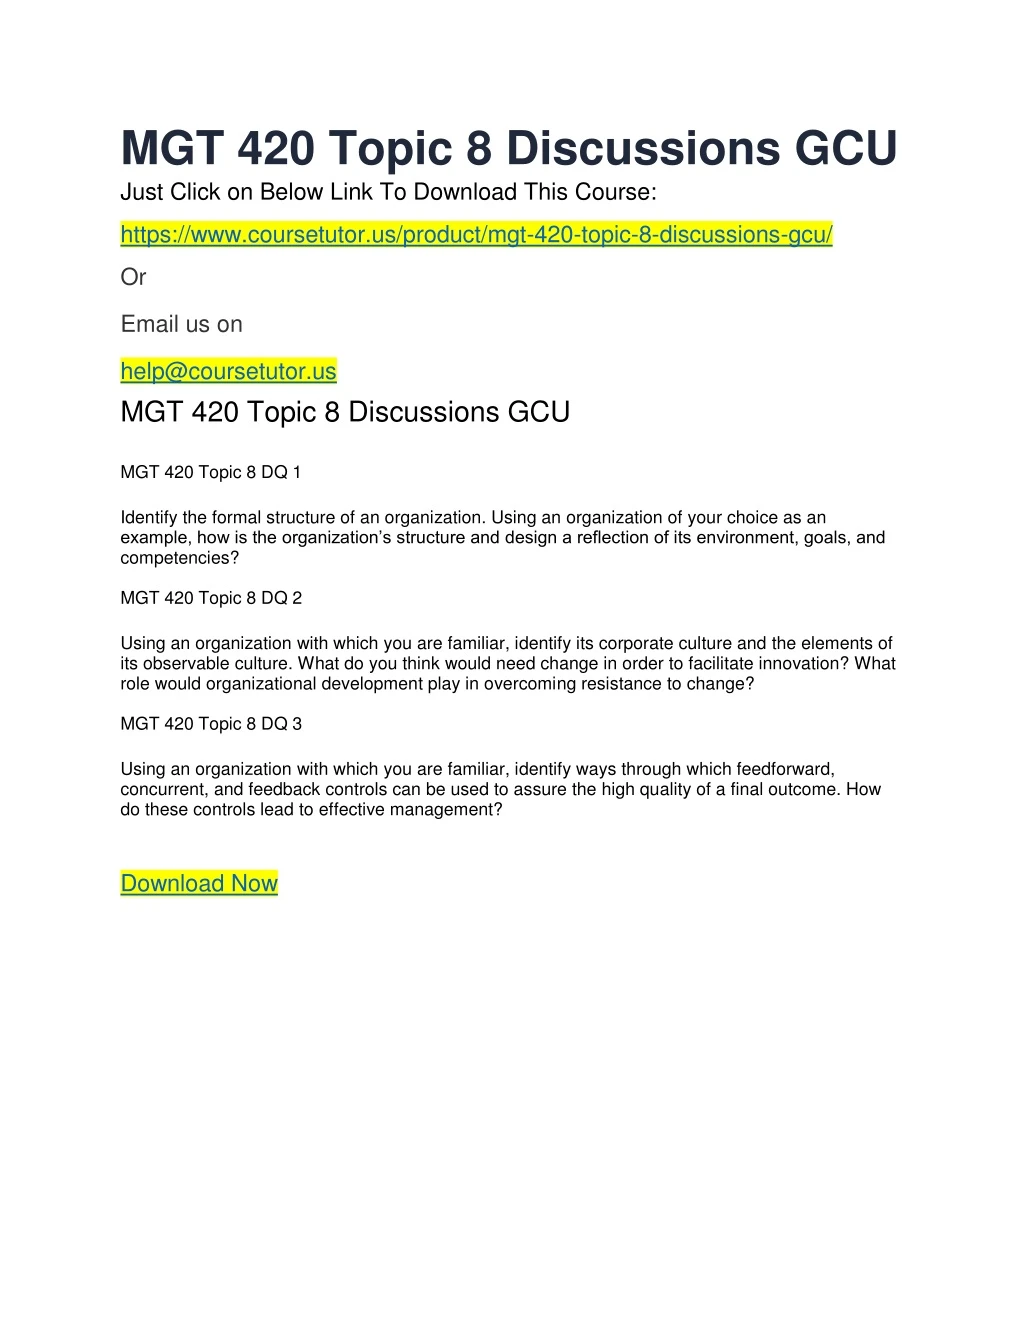 mgt 420 topic 8 discussions gcu just click